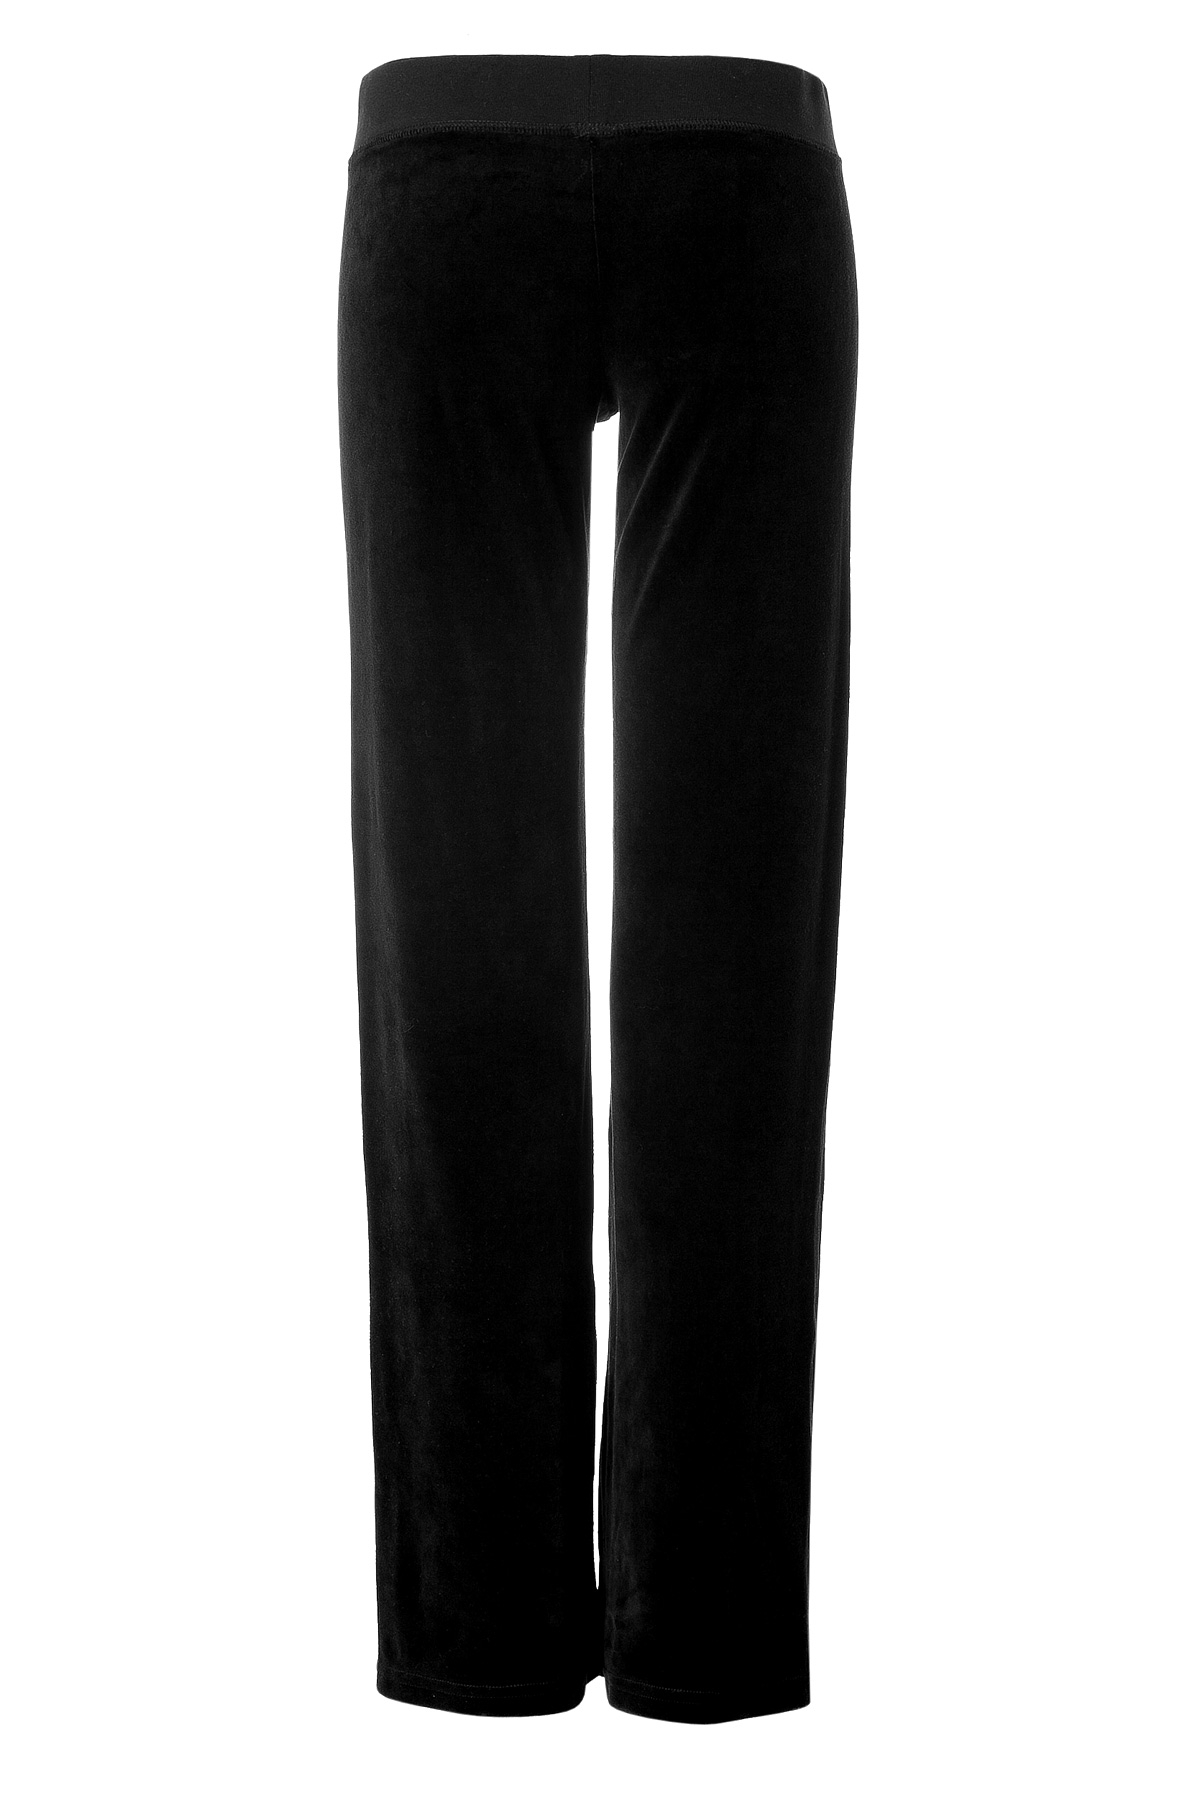 Lyst - Juicy couture Fancy Script Velour Sweatpants in Black